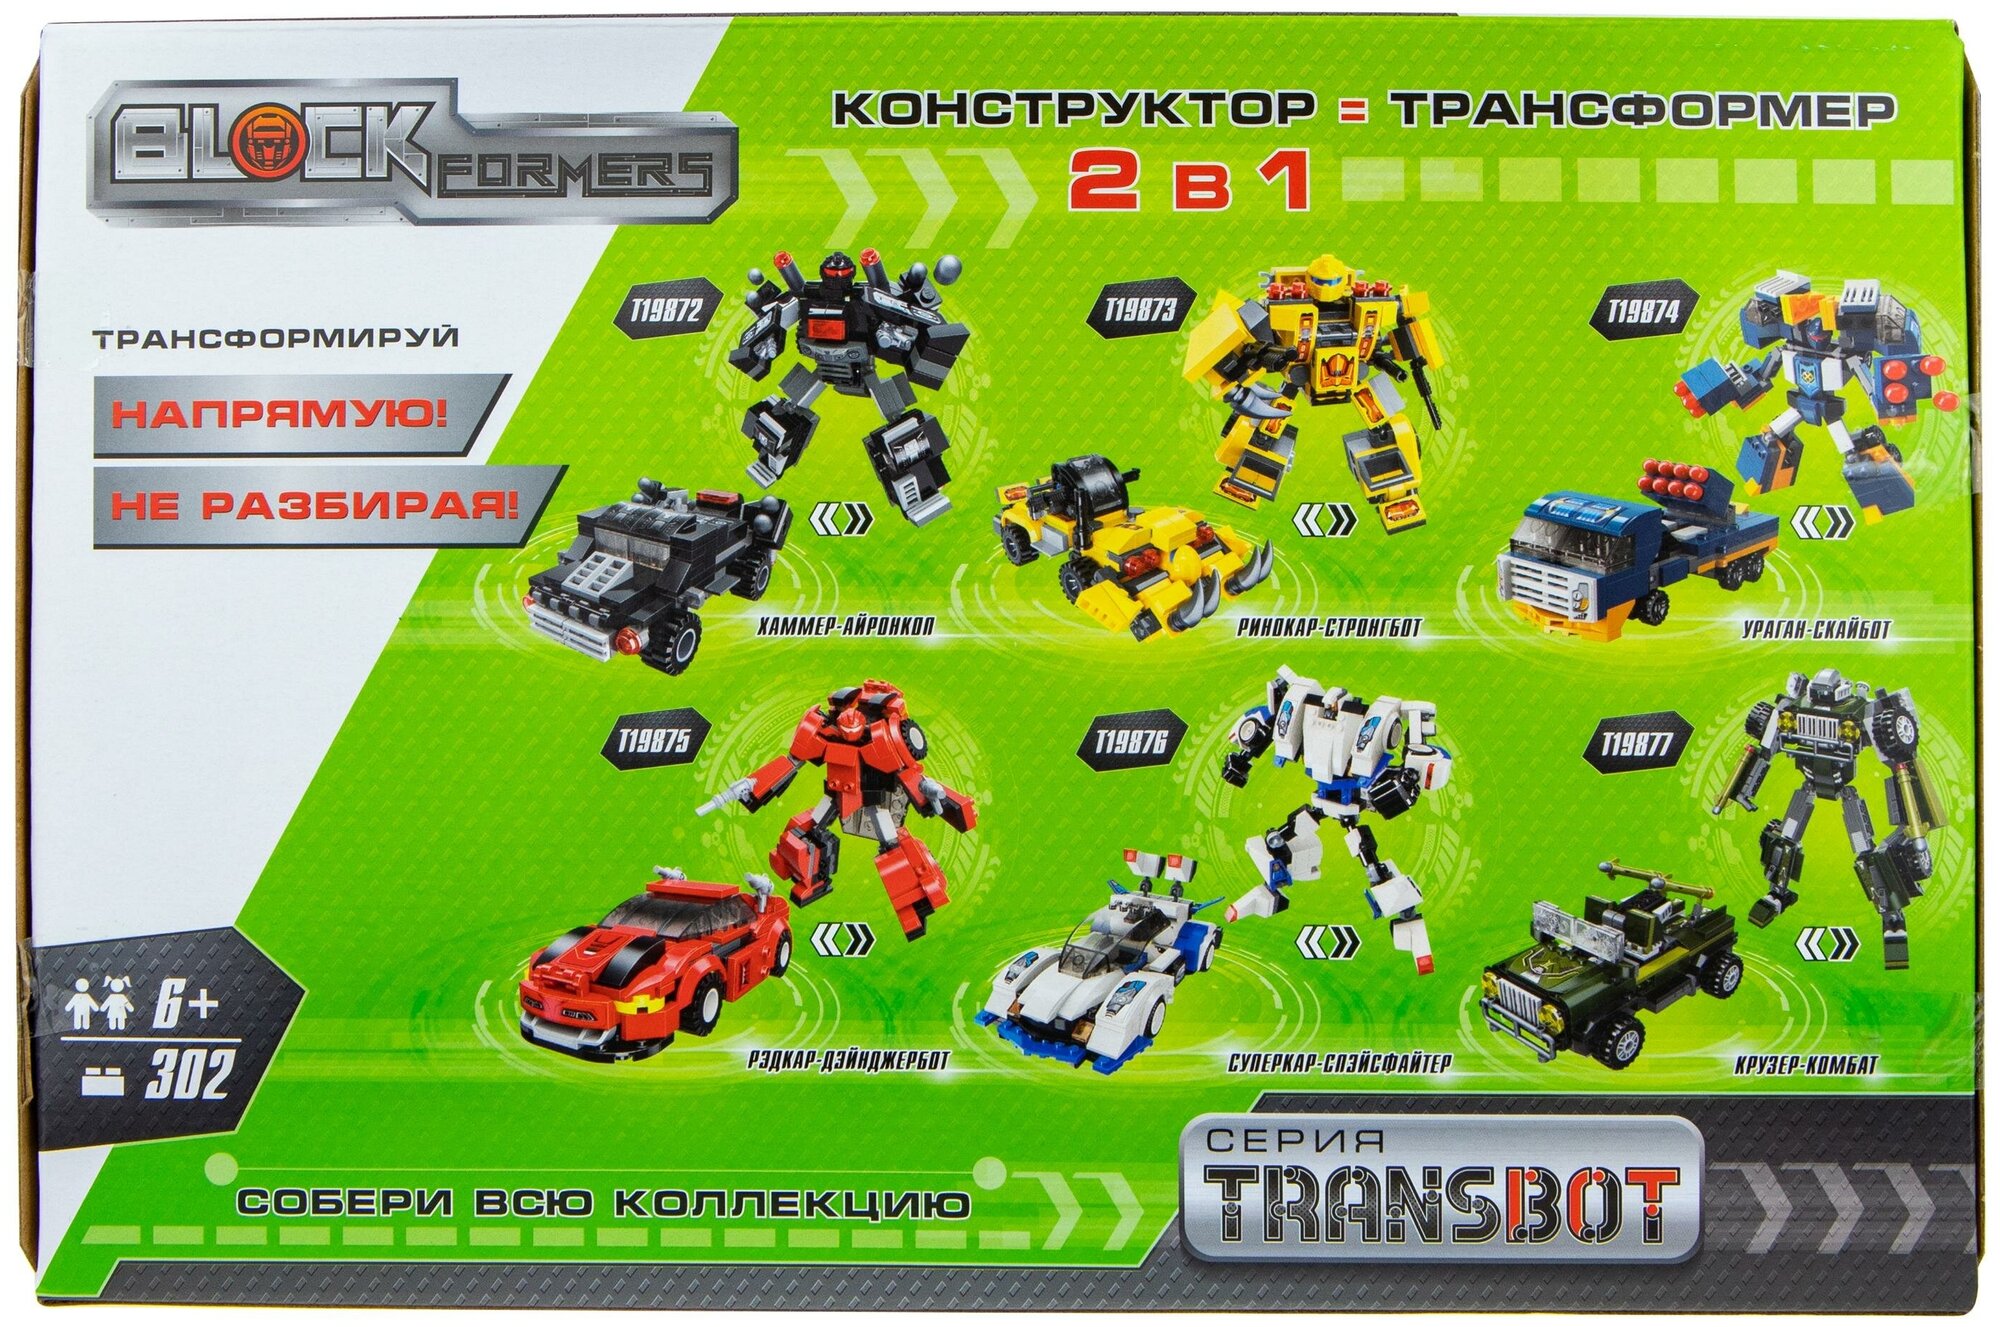 1toy Blockformers Transbot T19877 Конструктор "Крузер-Комбат" - фото №6